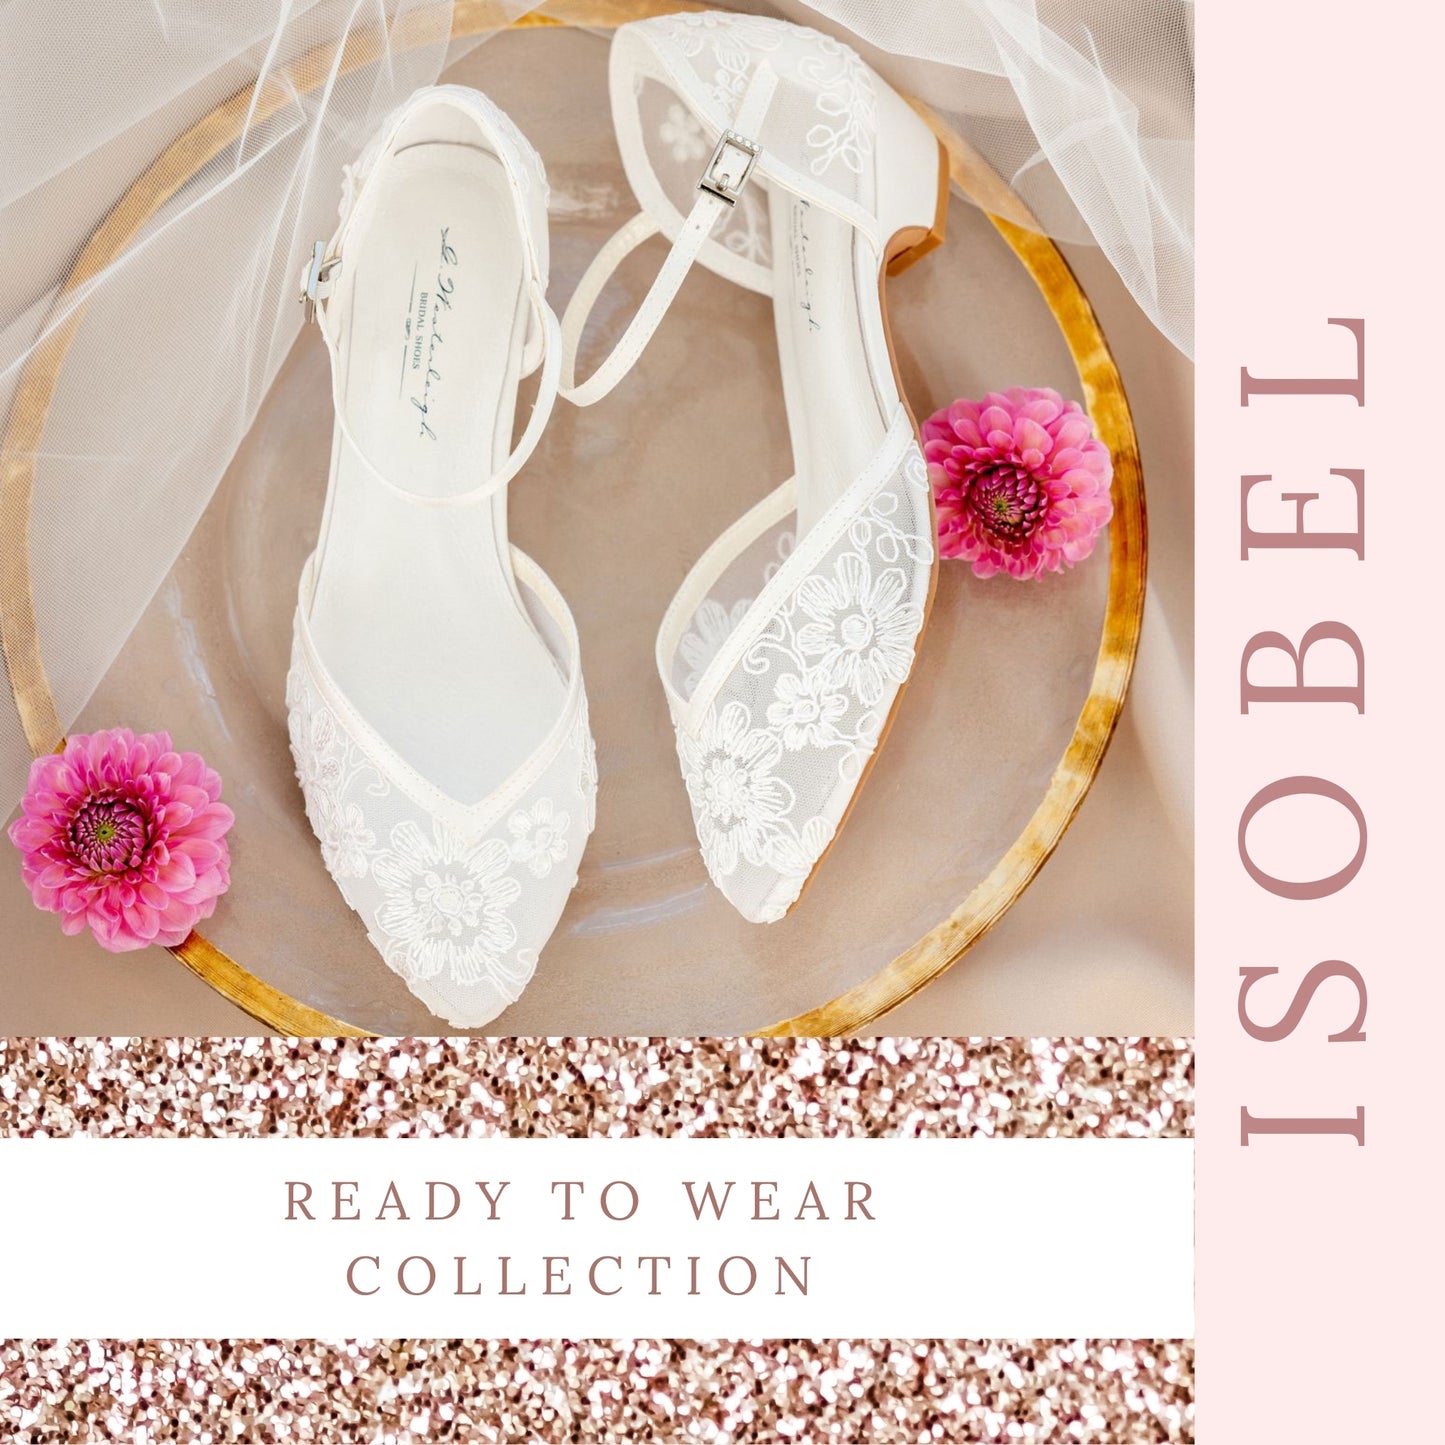 bridal-low-block-heel-sandals